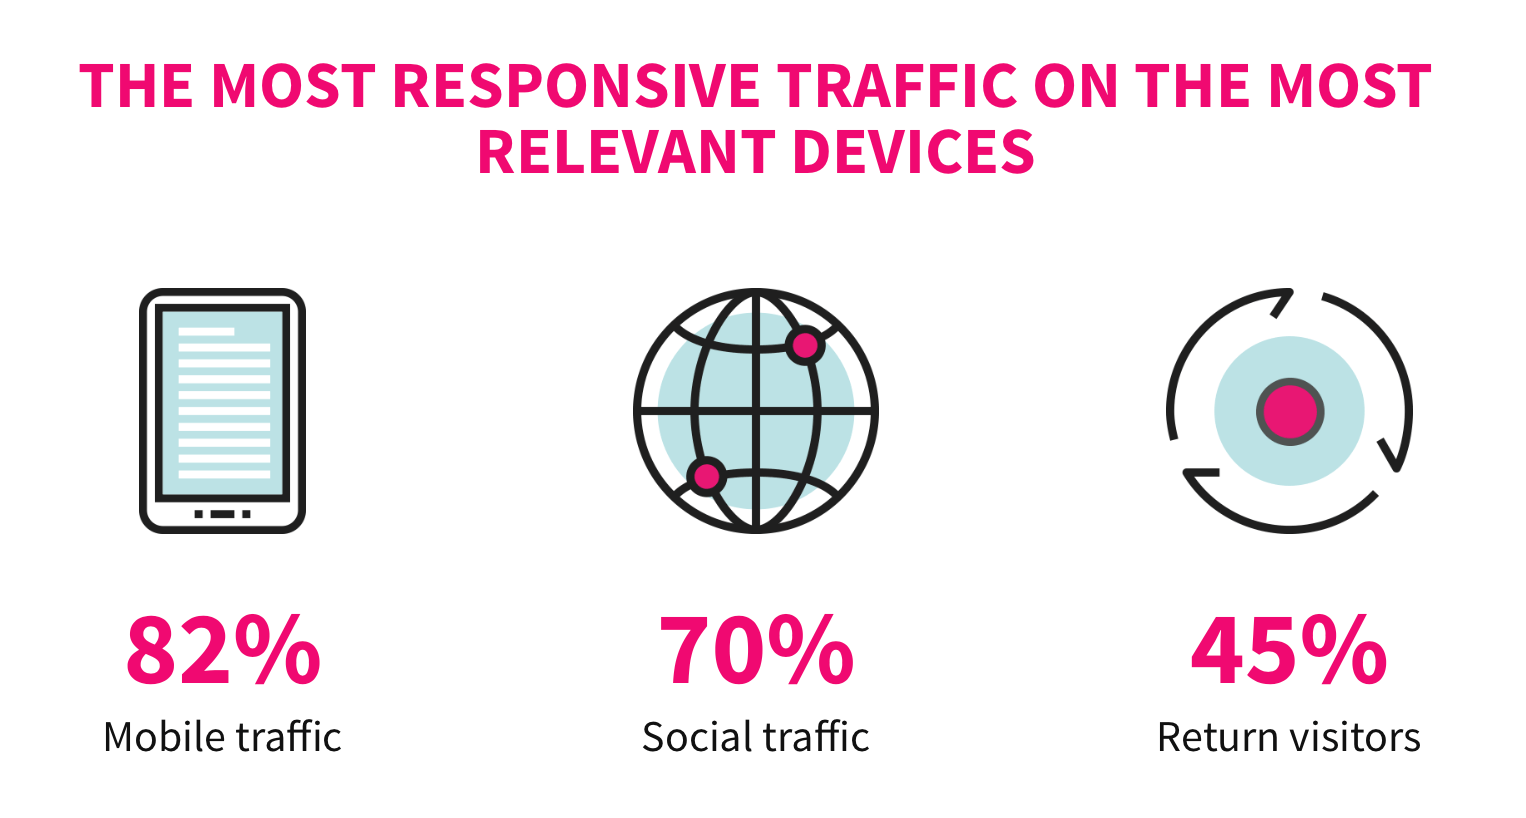 LifeBuzz: Most responsive traffic